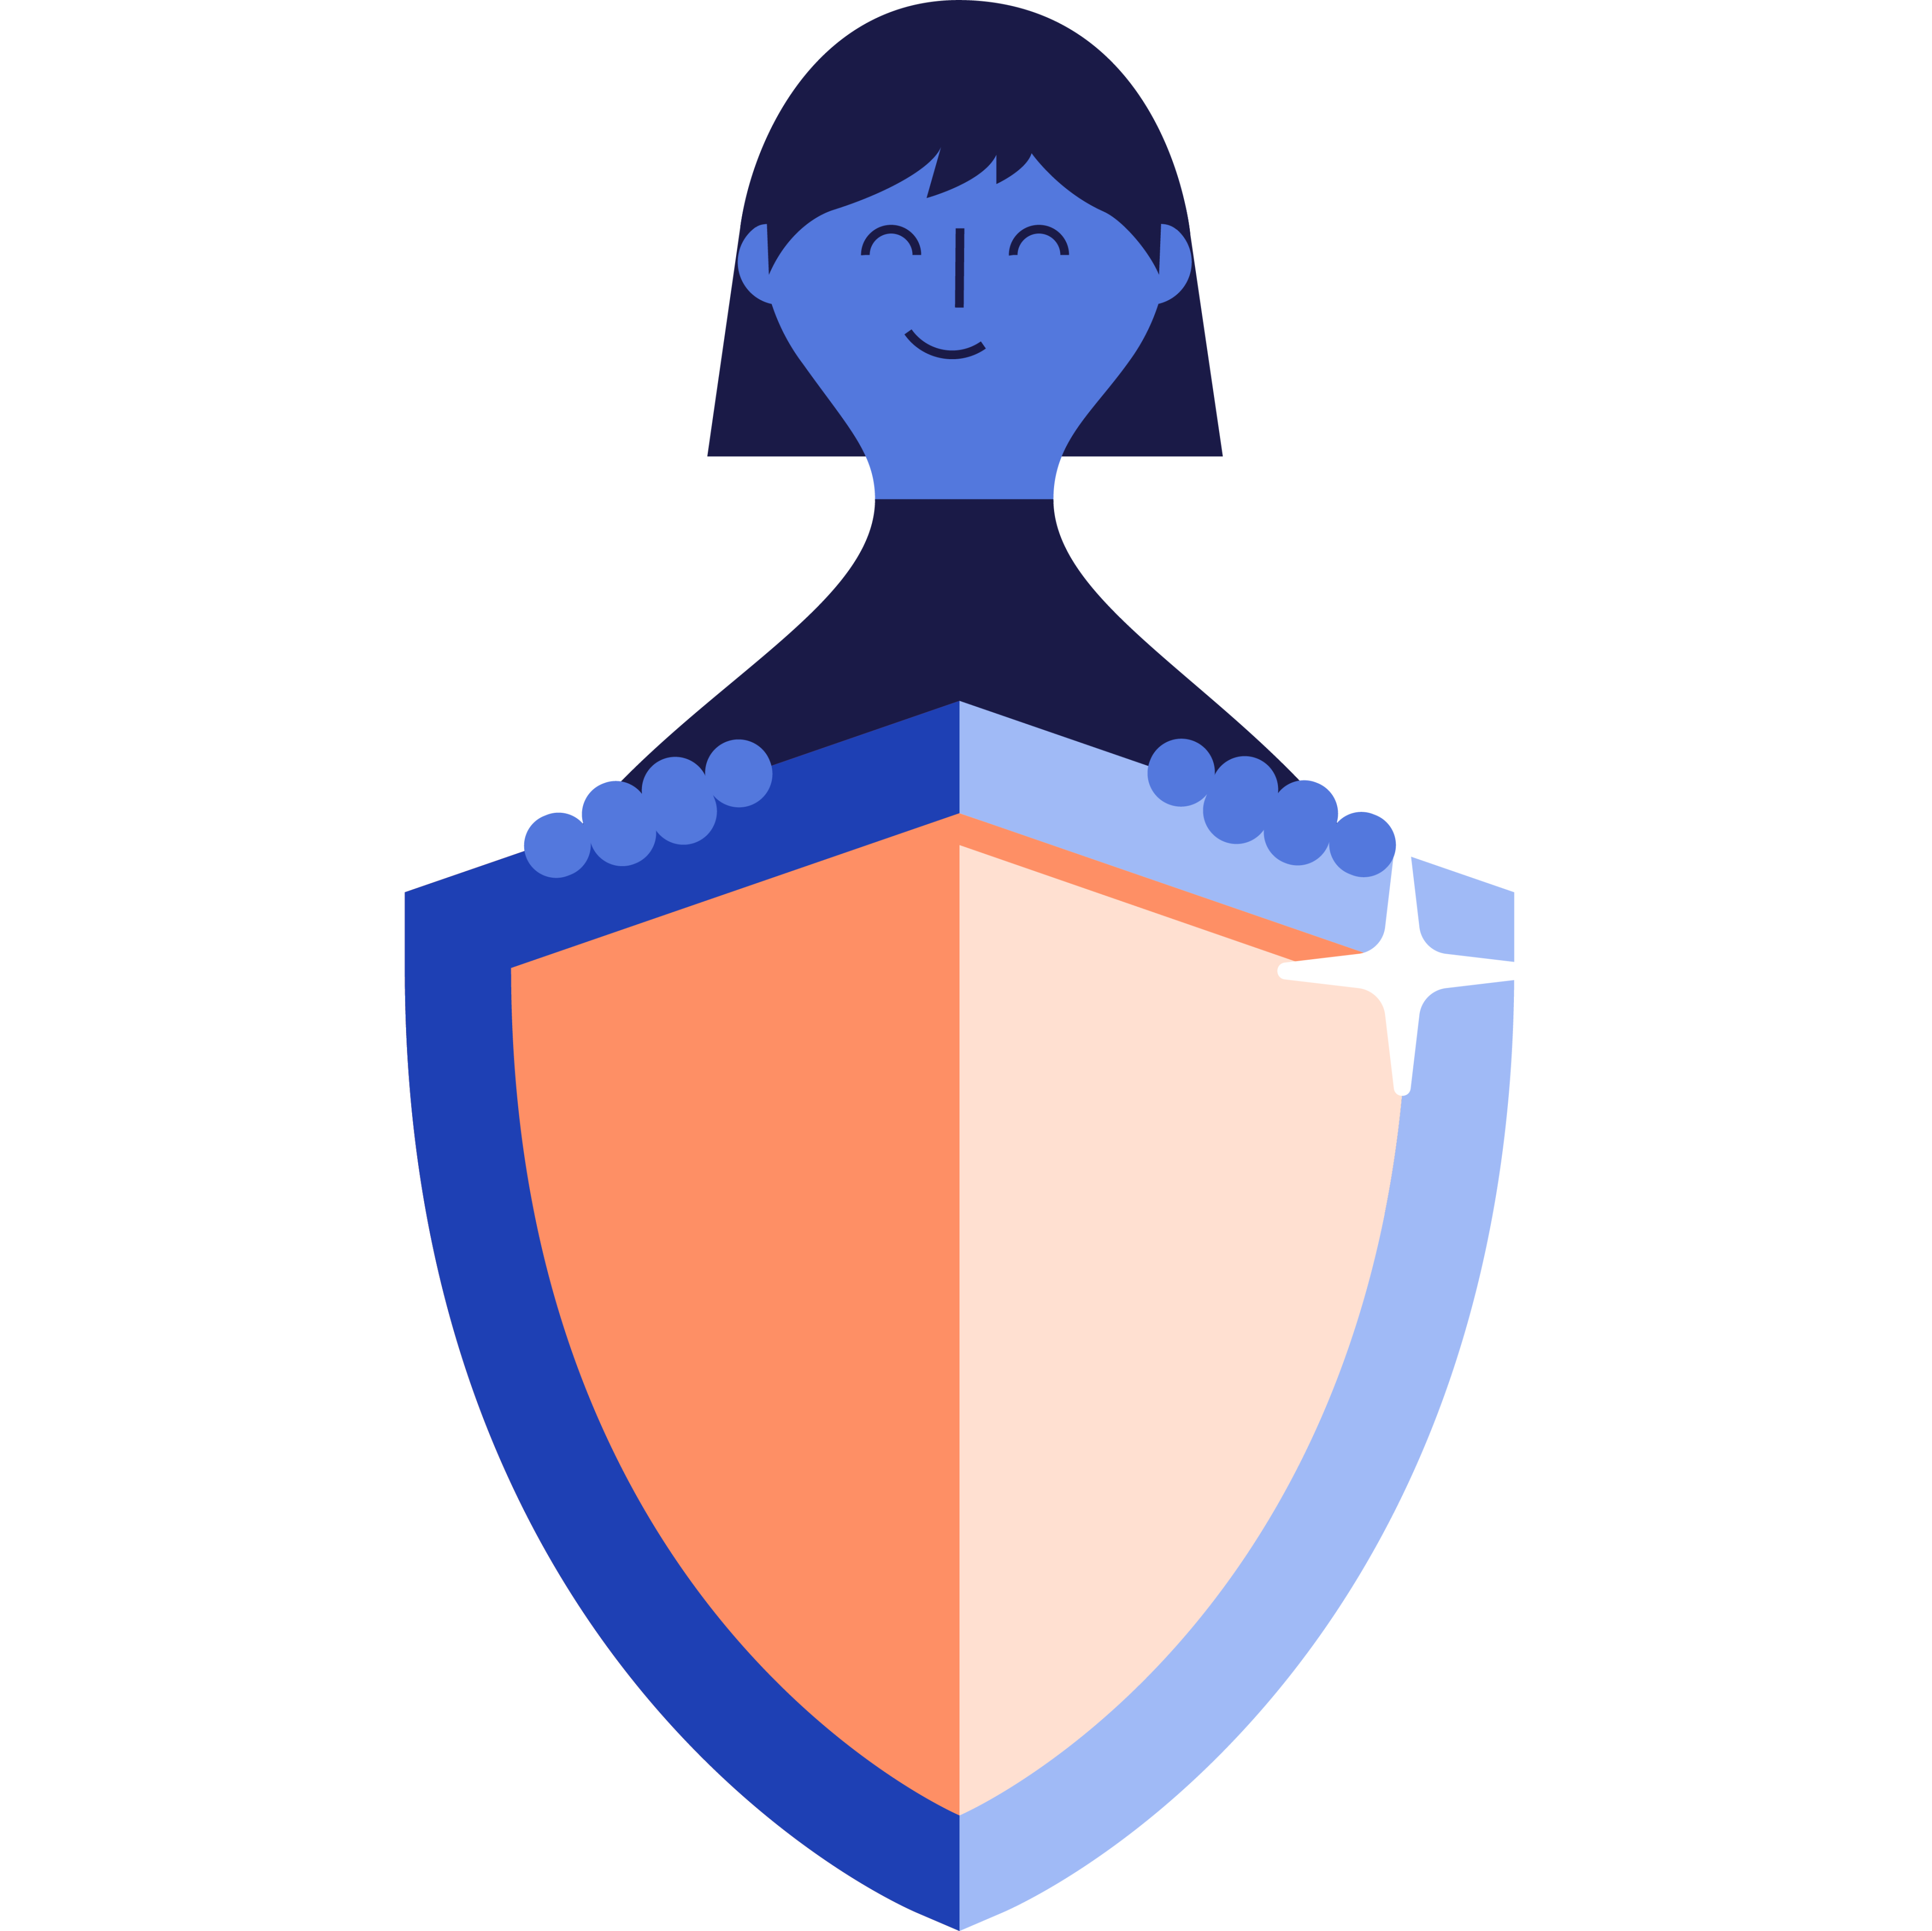 Illustration support shield